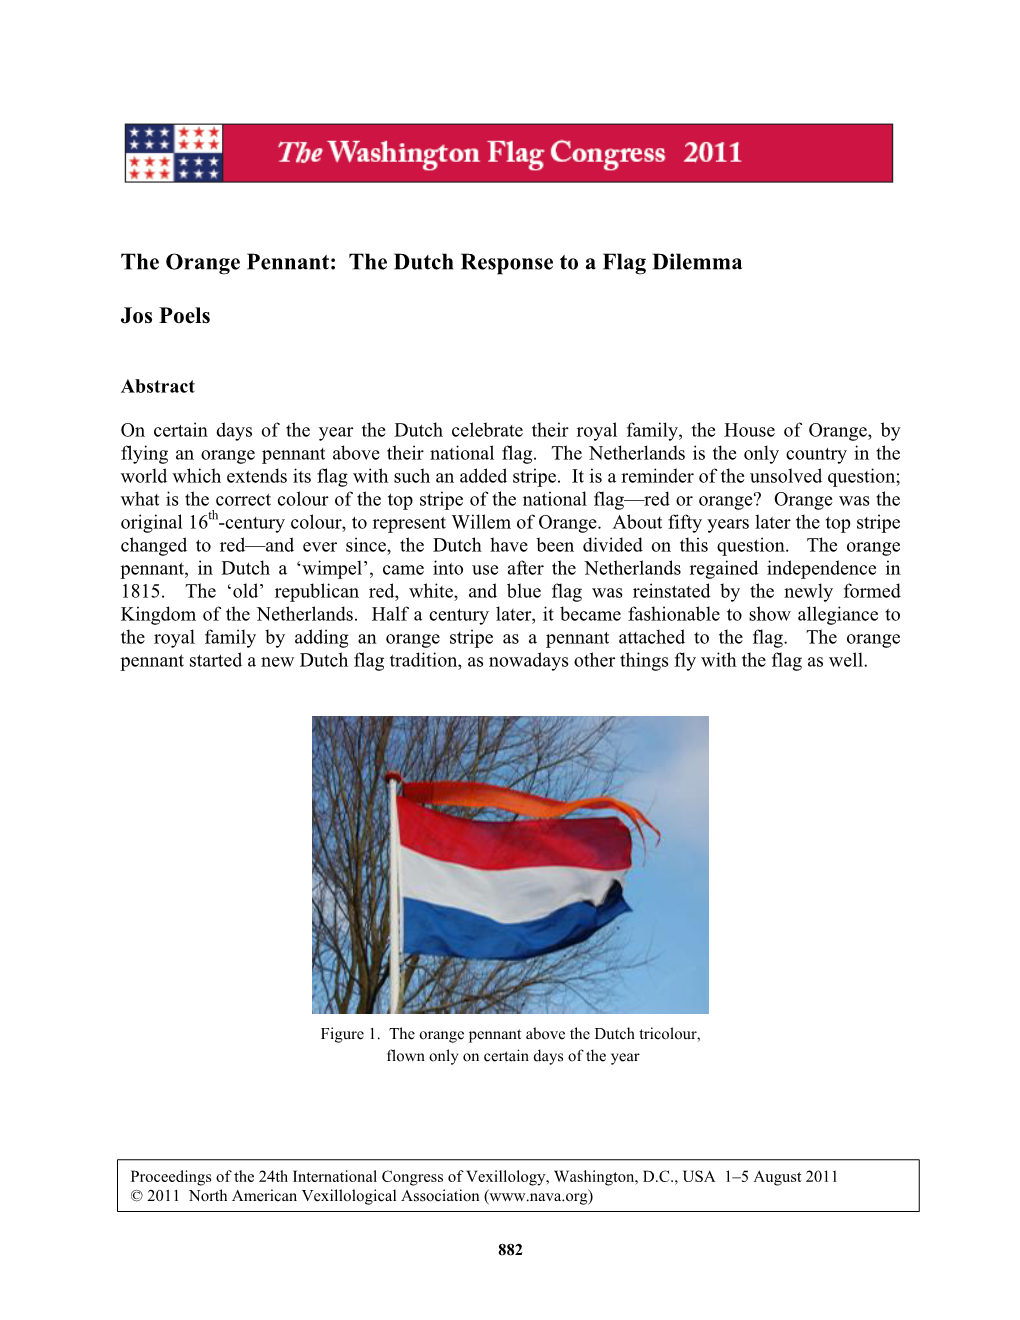 The Orange Pennant: the Dutch Response to a Flag Dilemma